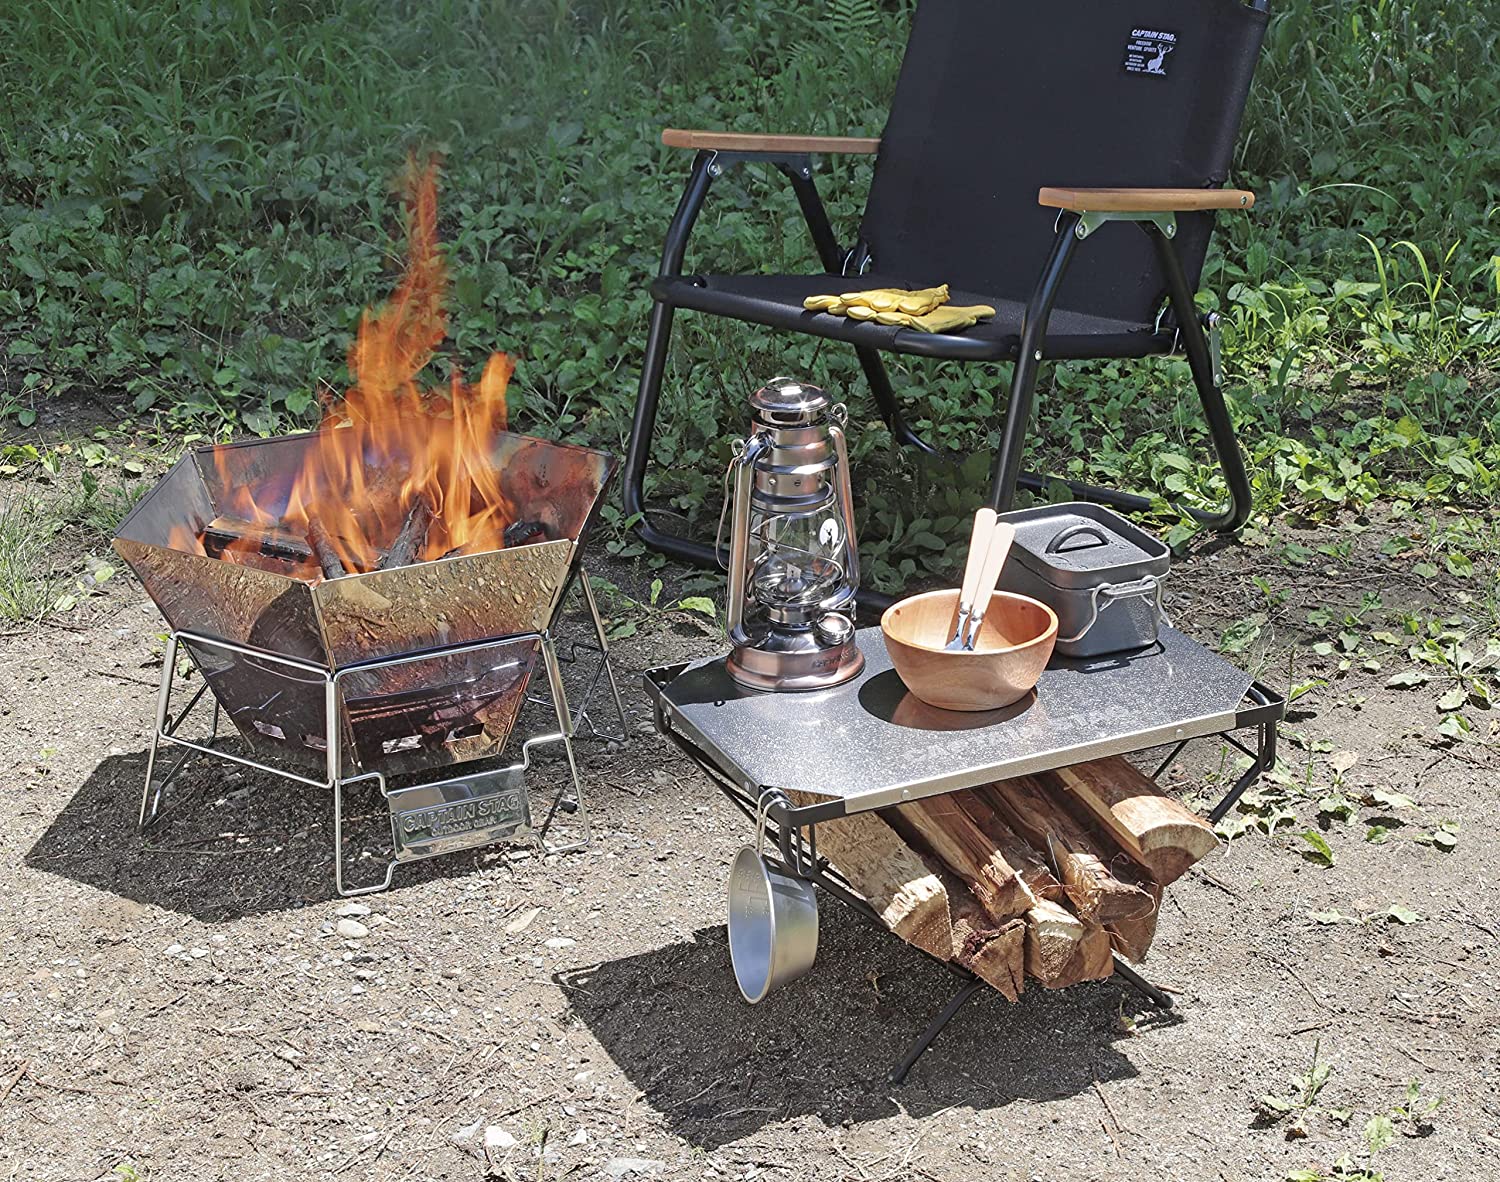 CampLand アウトドア折りたたみテーブル アルミ 軽量 高さ調節可能 収納オーガナイザー付き BBQ パーティー キャンプ用 グリーン